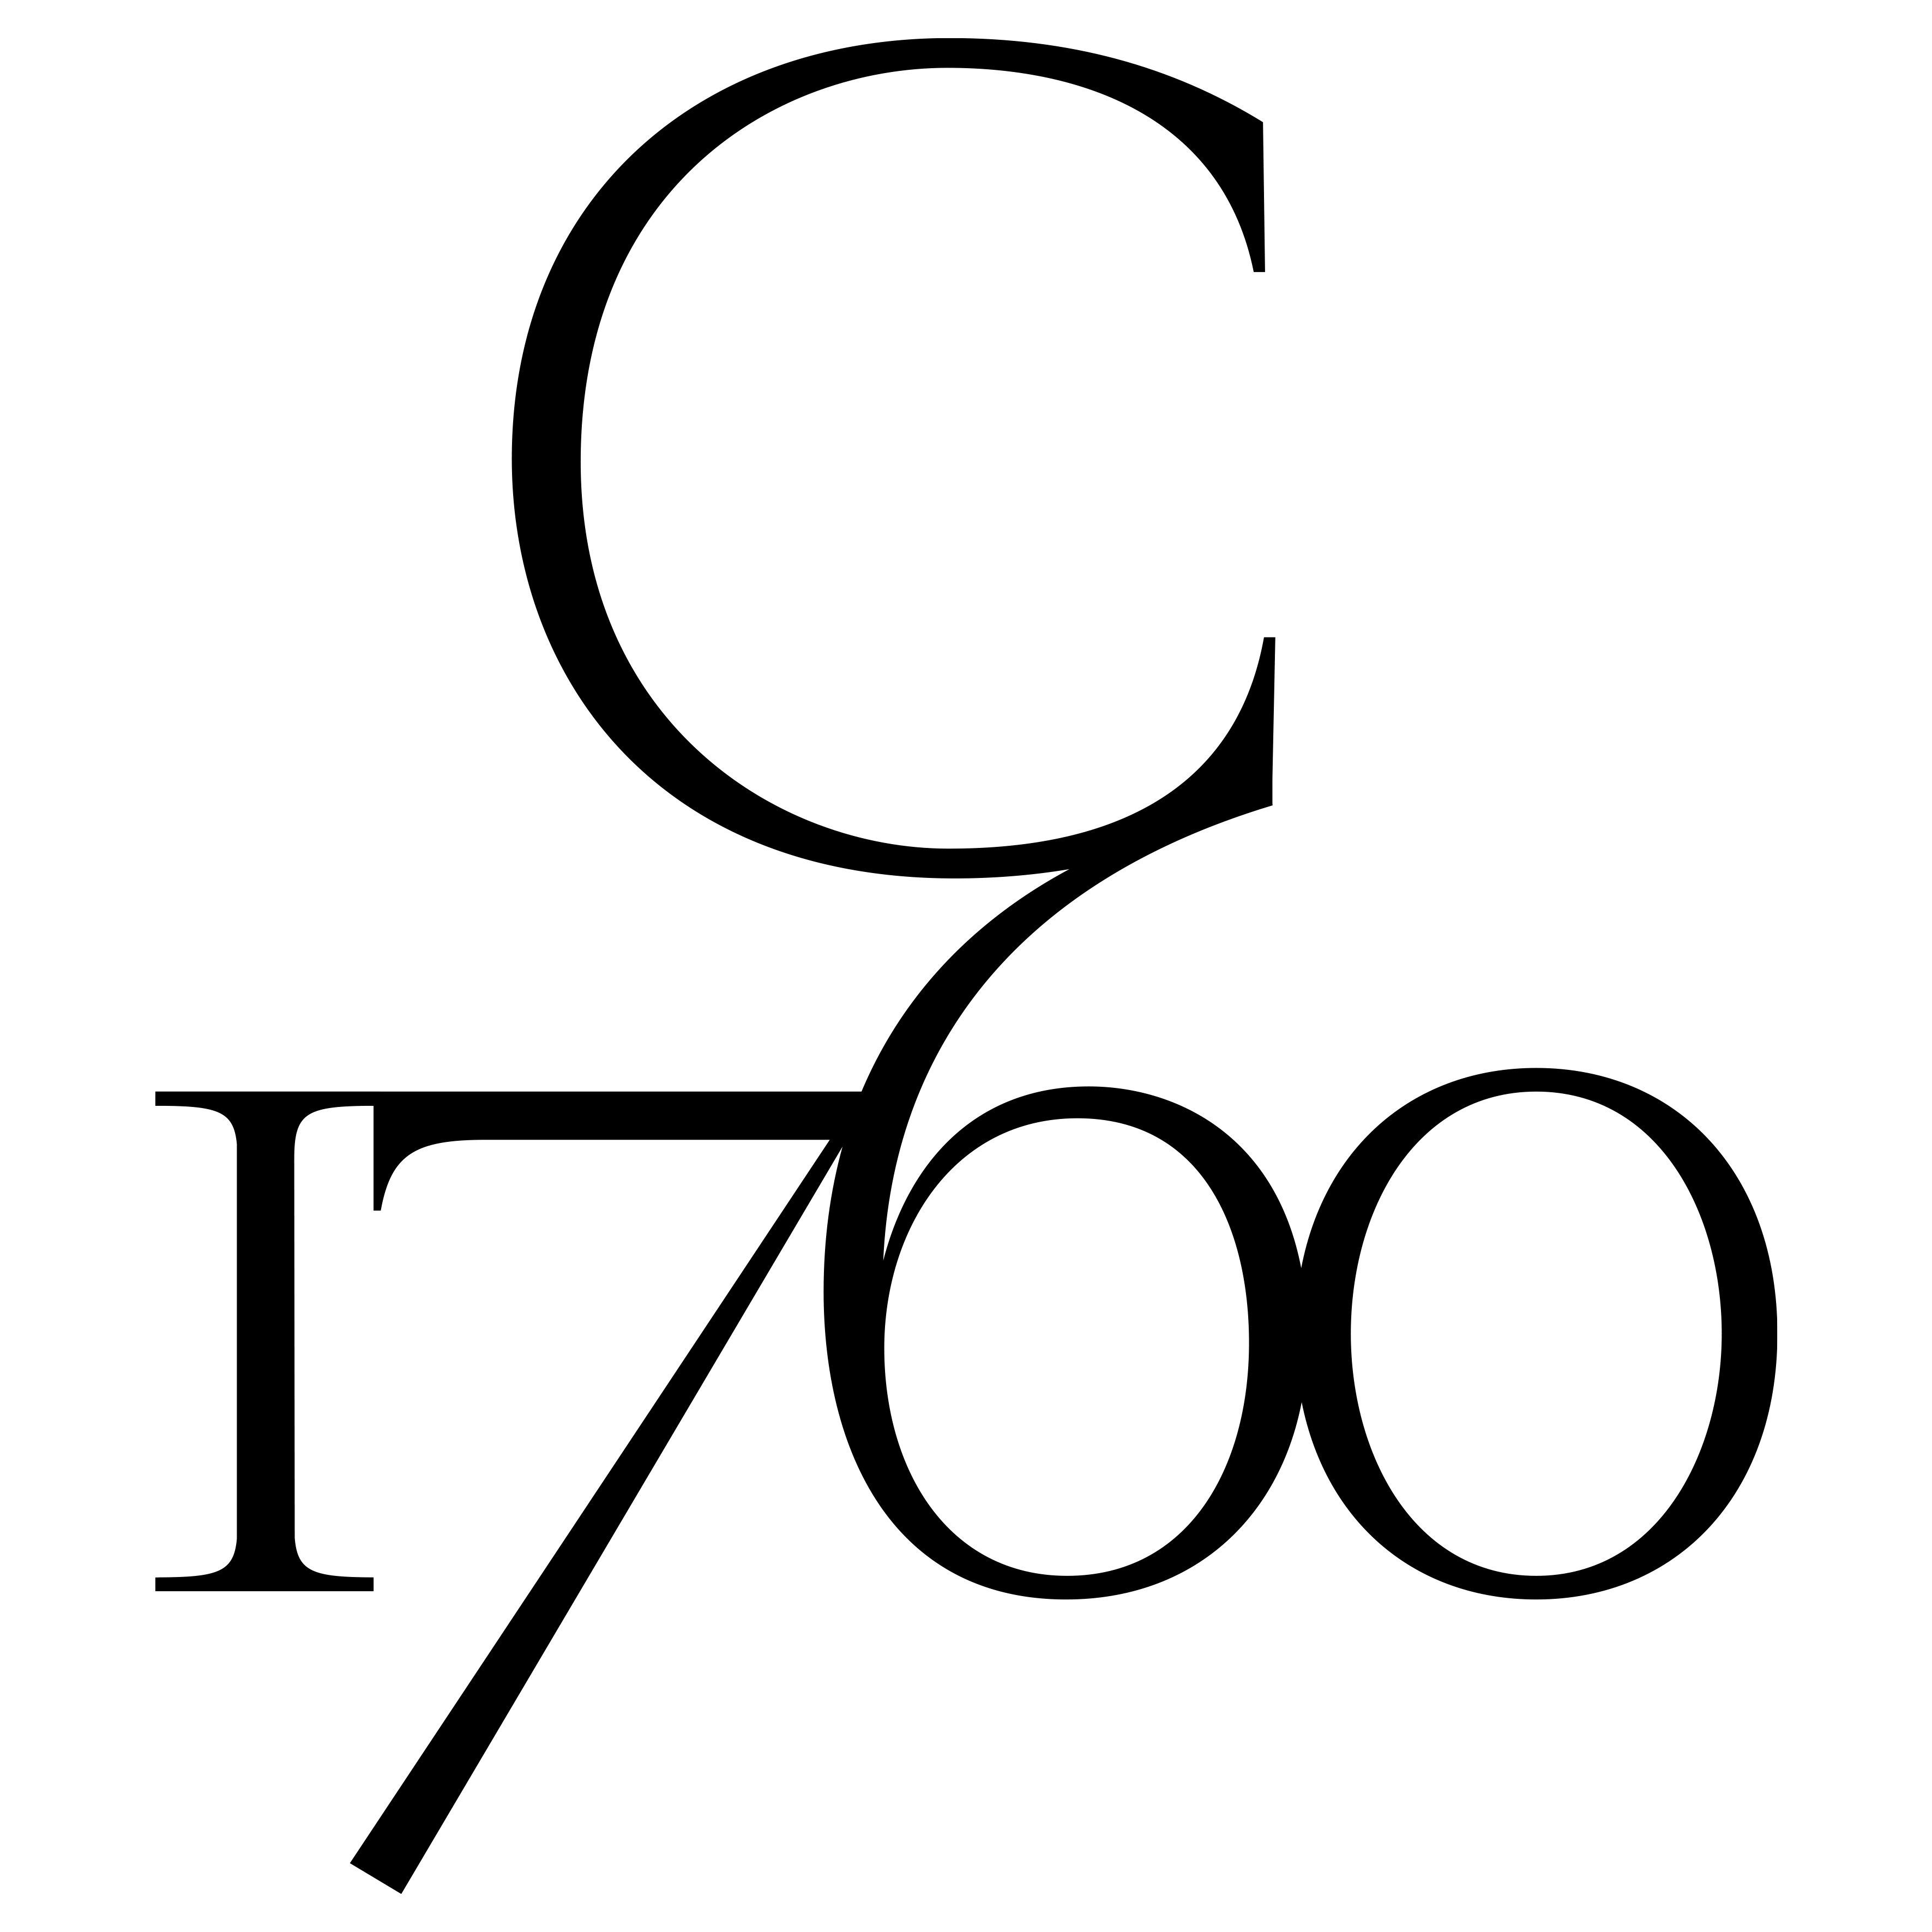 C1760 Gallery company logo